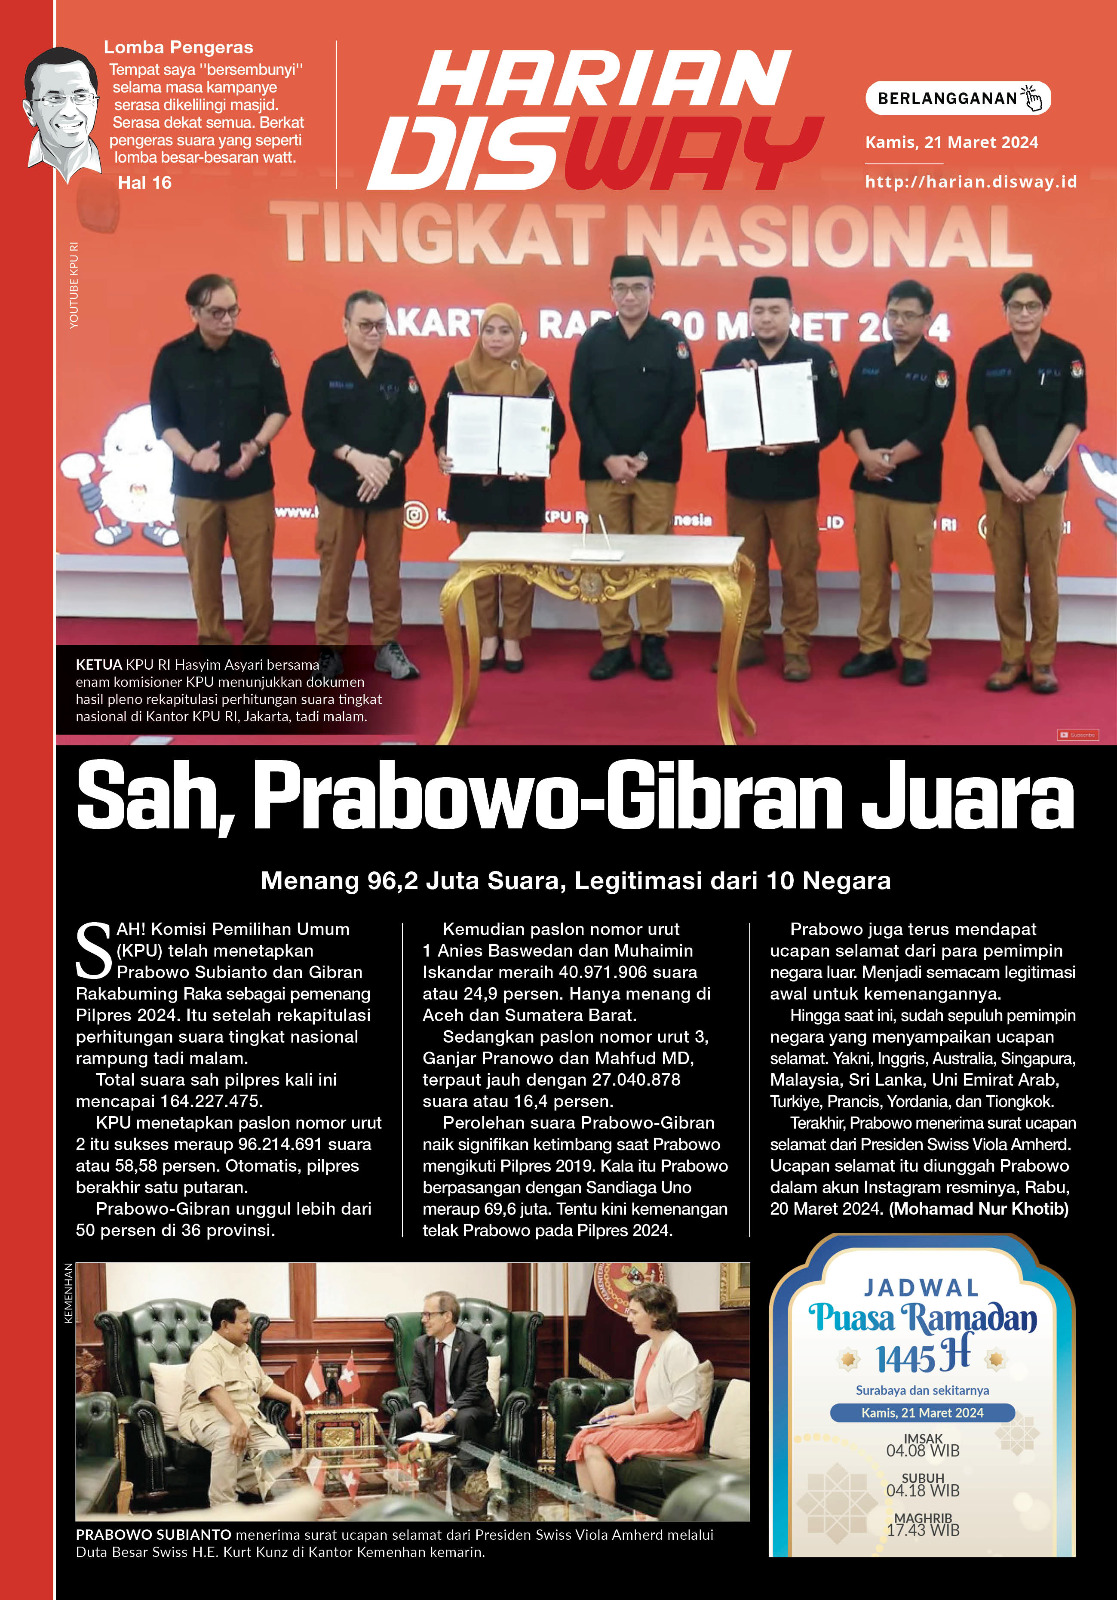 Sah, Prabowo-Gibran Juara